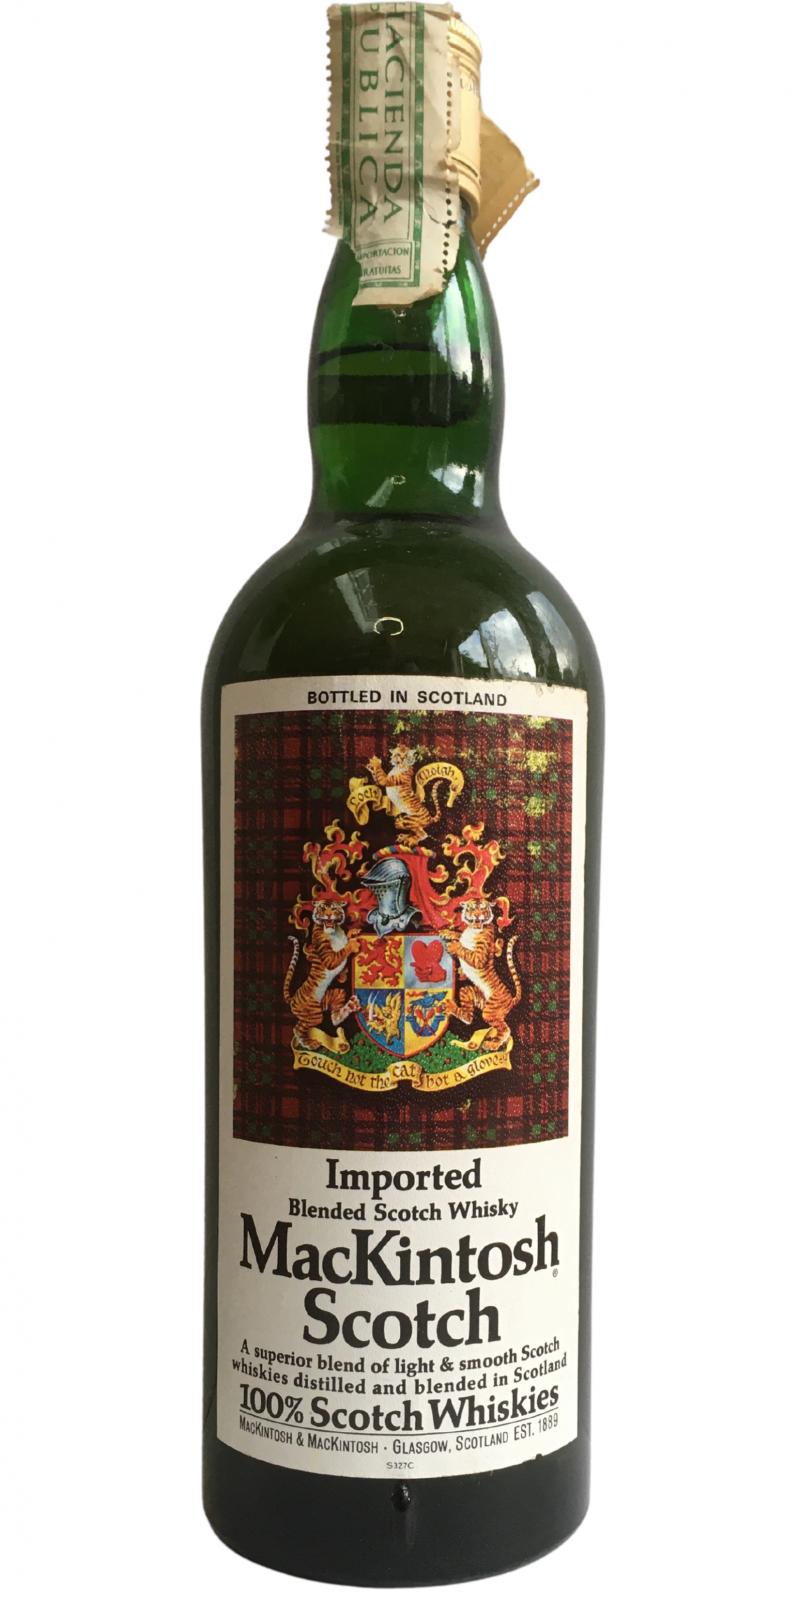 MacKintosh Scotch Imported Blended Scotch Whisky 40% 750ml